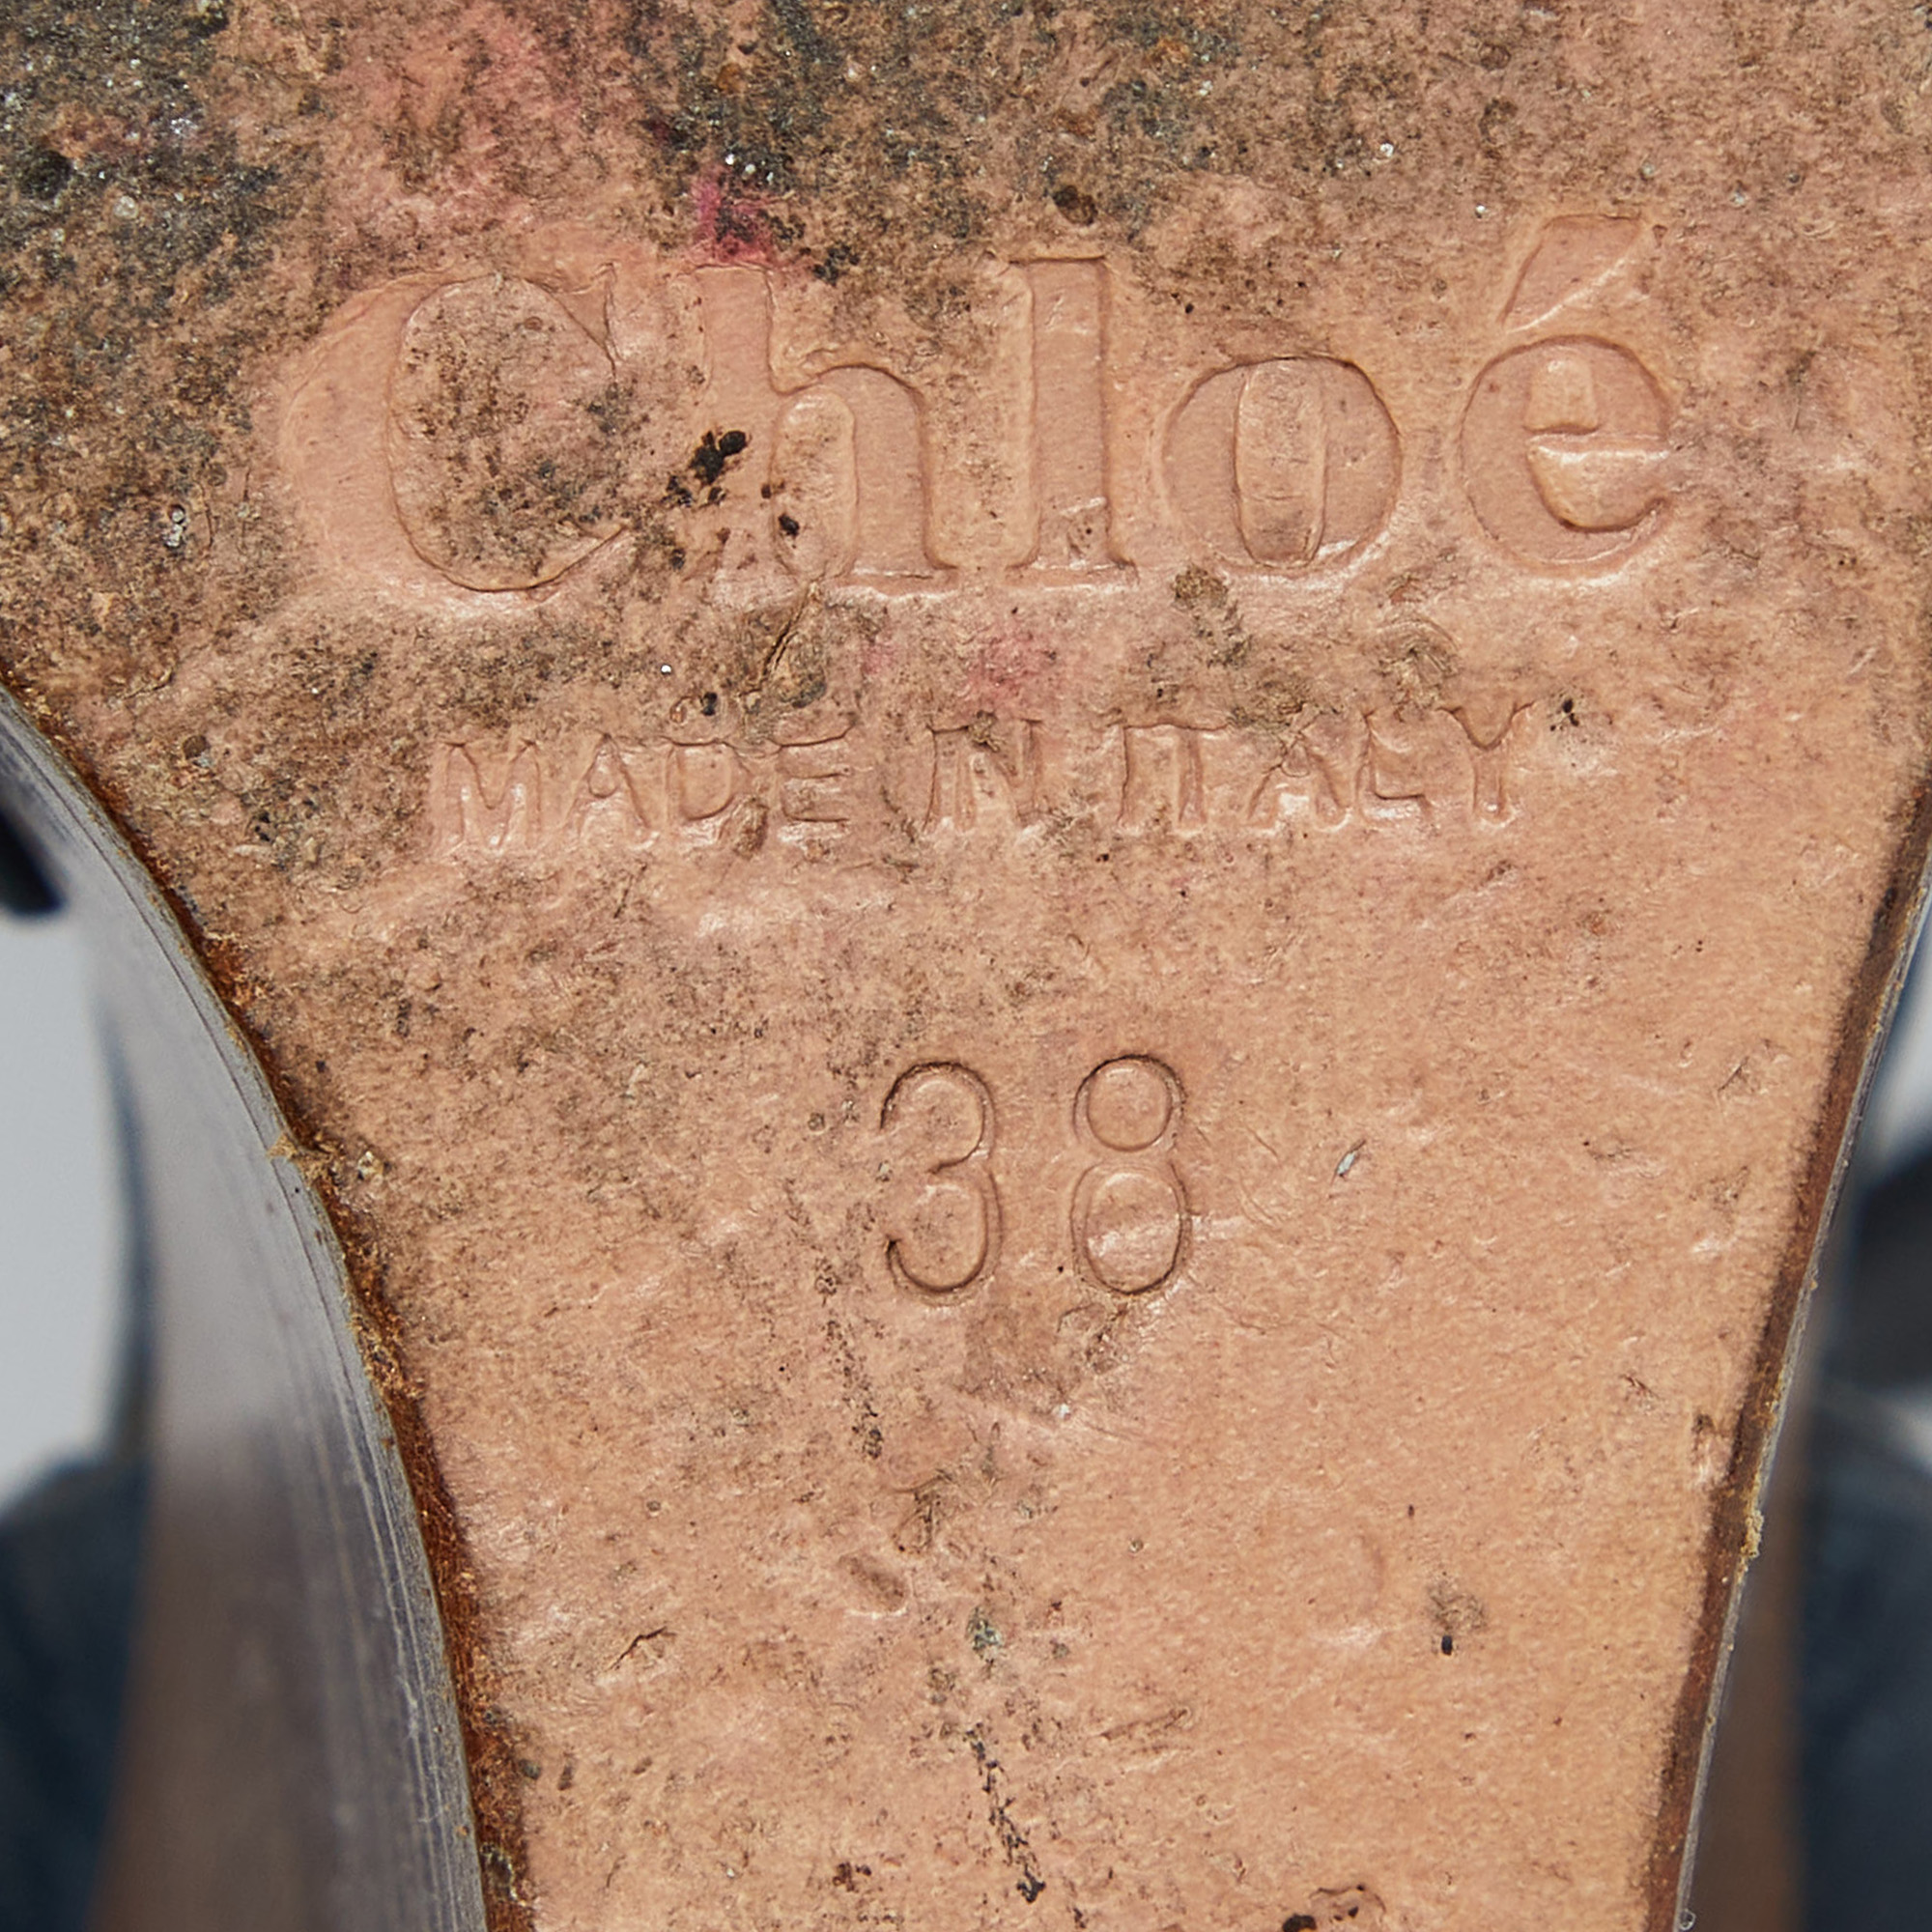 Chloe Navy Blue Leather Buckle Detail Wedge Platform Ankle Wrap Sandals Size 38